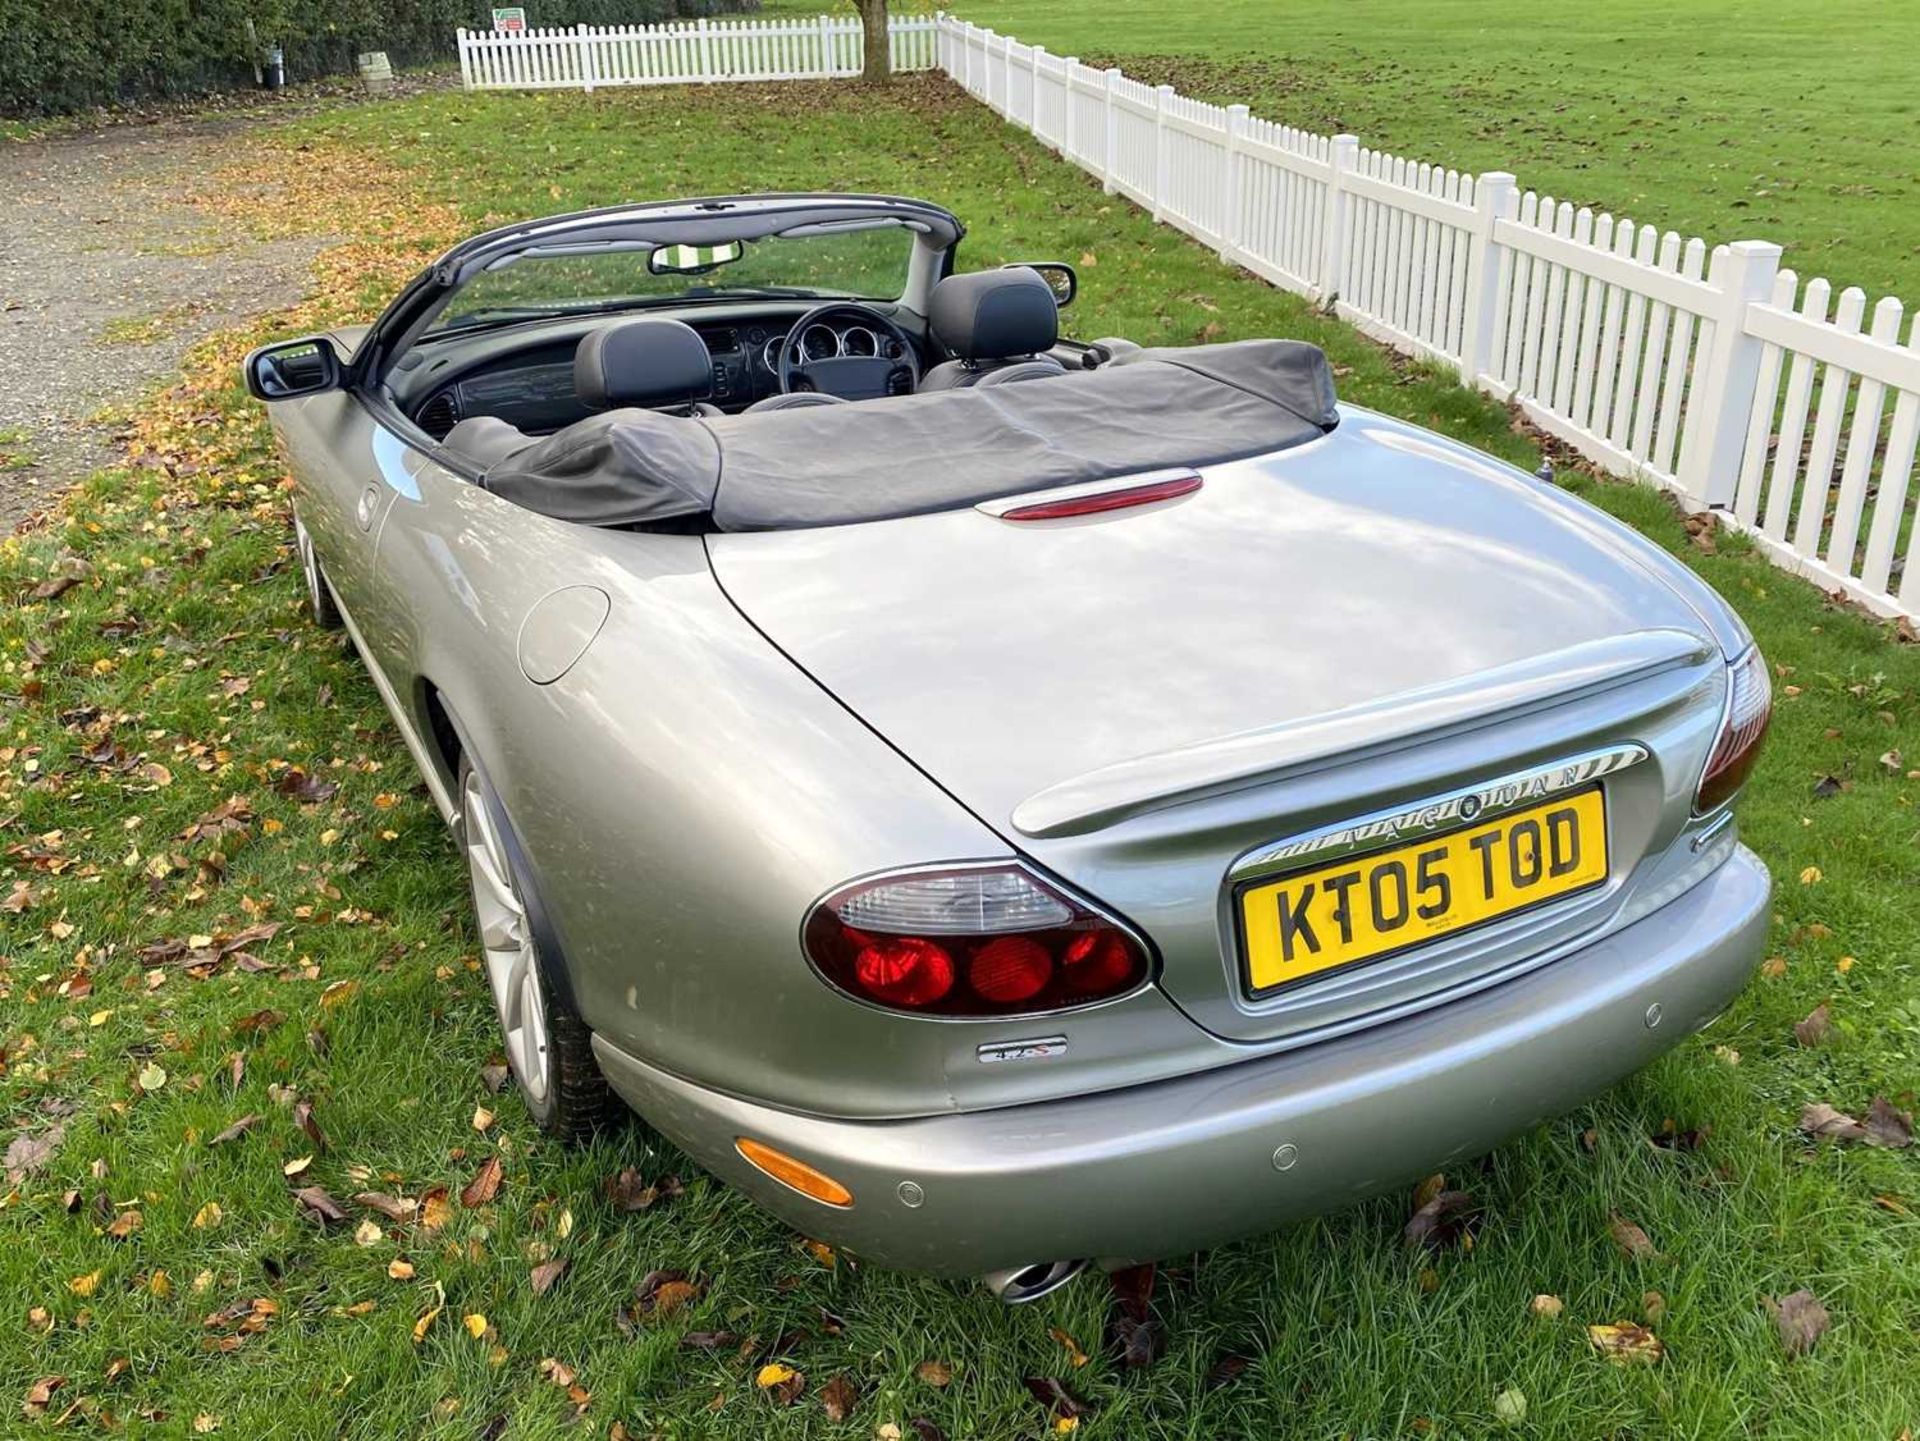 2005 Jaguar XK8 4.2 S Convertible Rare, limited edition model - Image 34 of 100